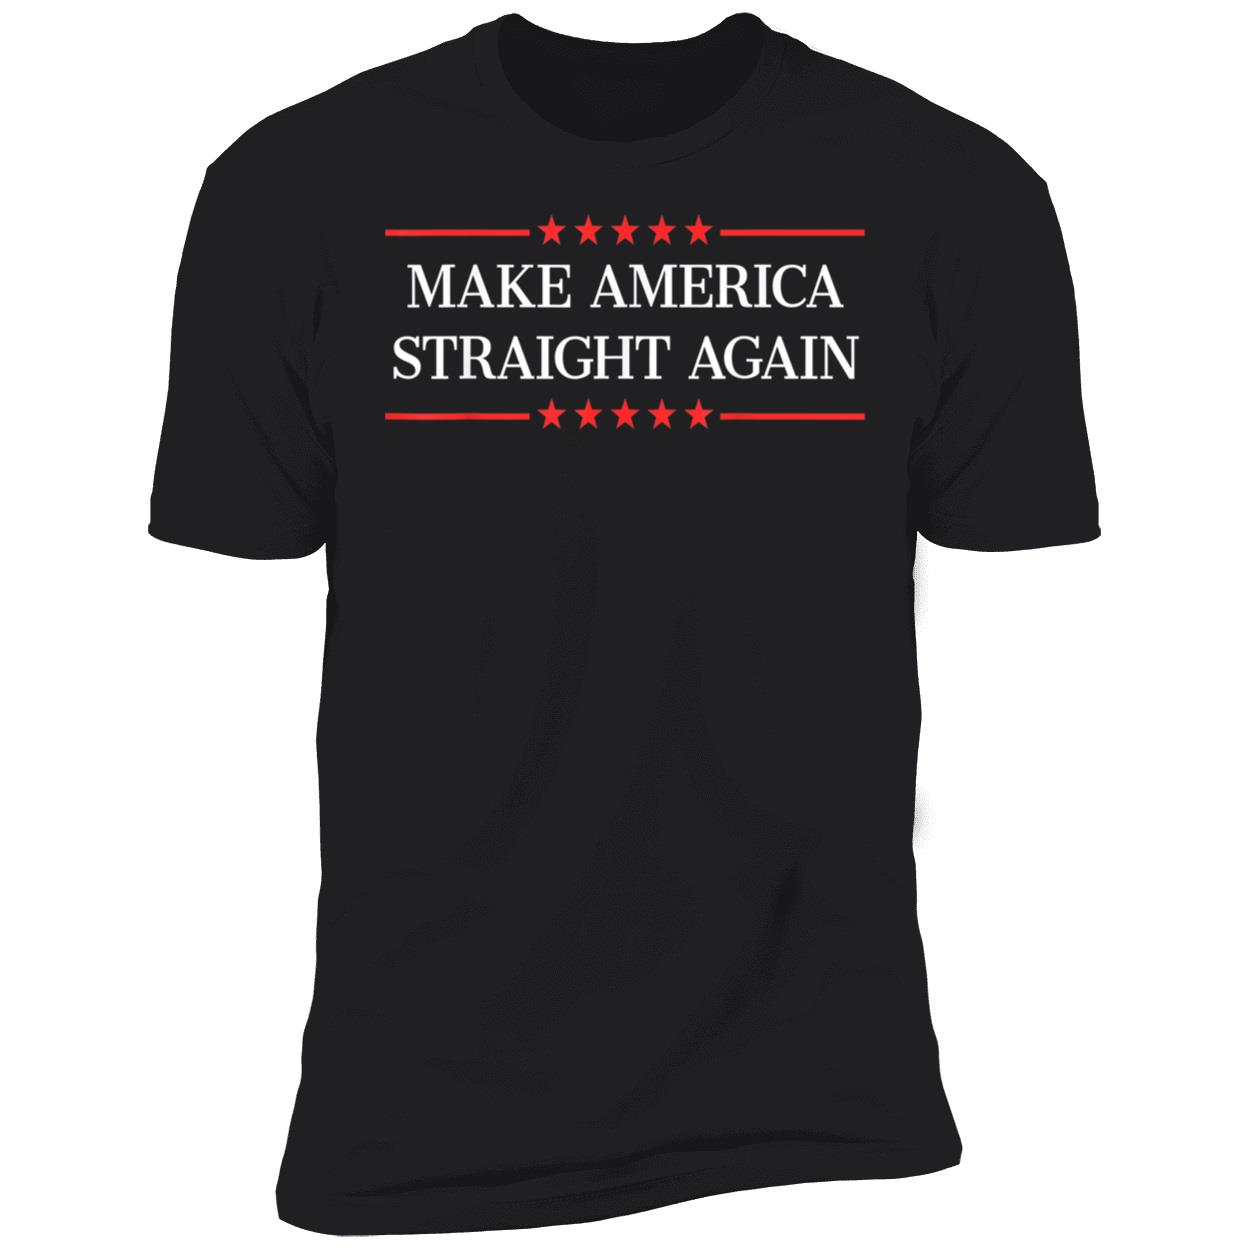 Make America Straight Again Shirt